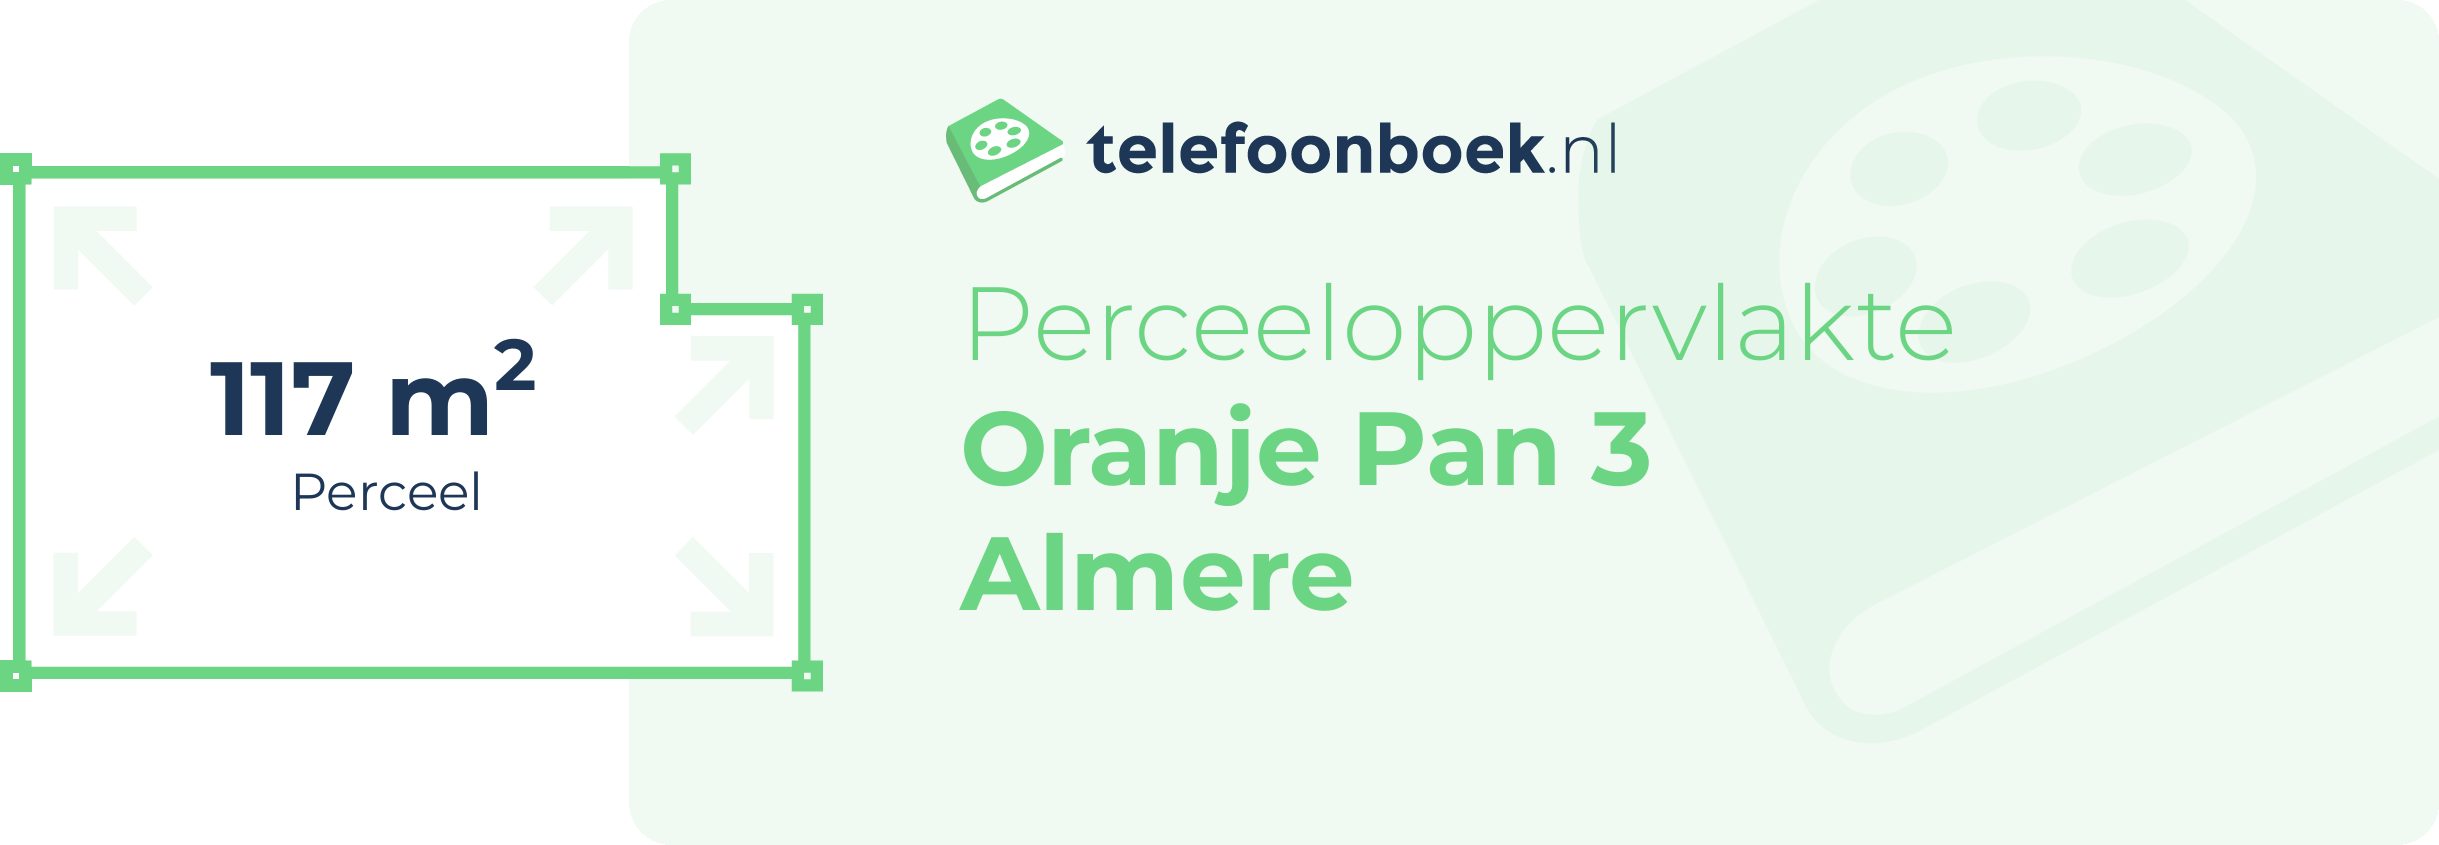 Perceeloppervlakte Oranje Pan 3 Almere